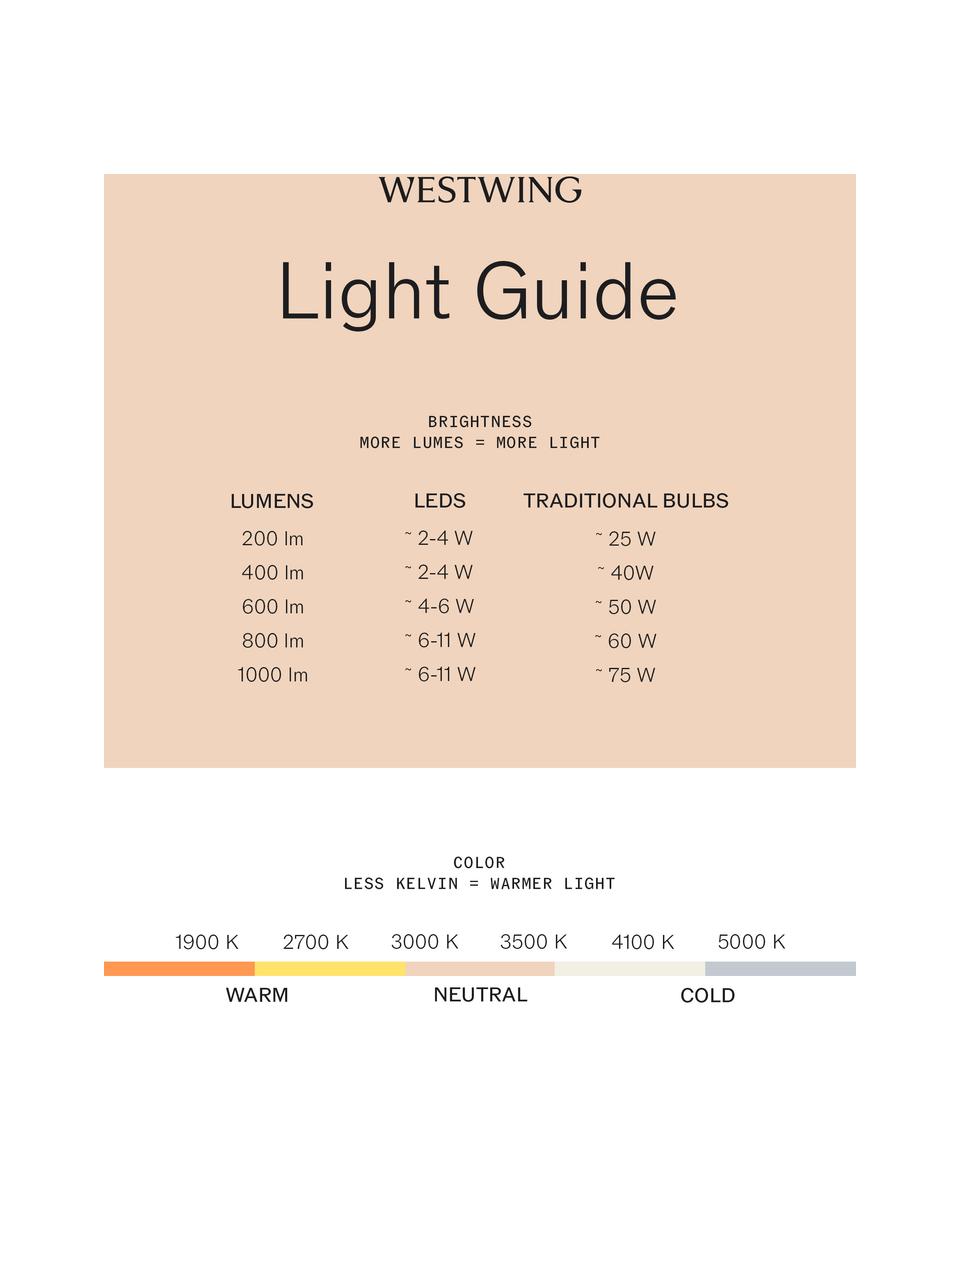 Solar Lichterkette Drop, 500 cm, 50 LEDs, Lampenschirm: Kunststoff, Weiss, L 500 cm